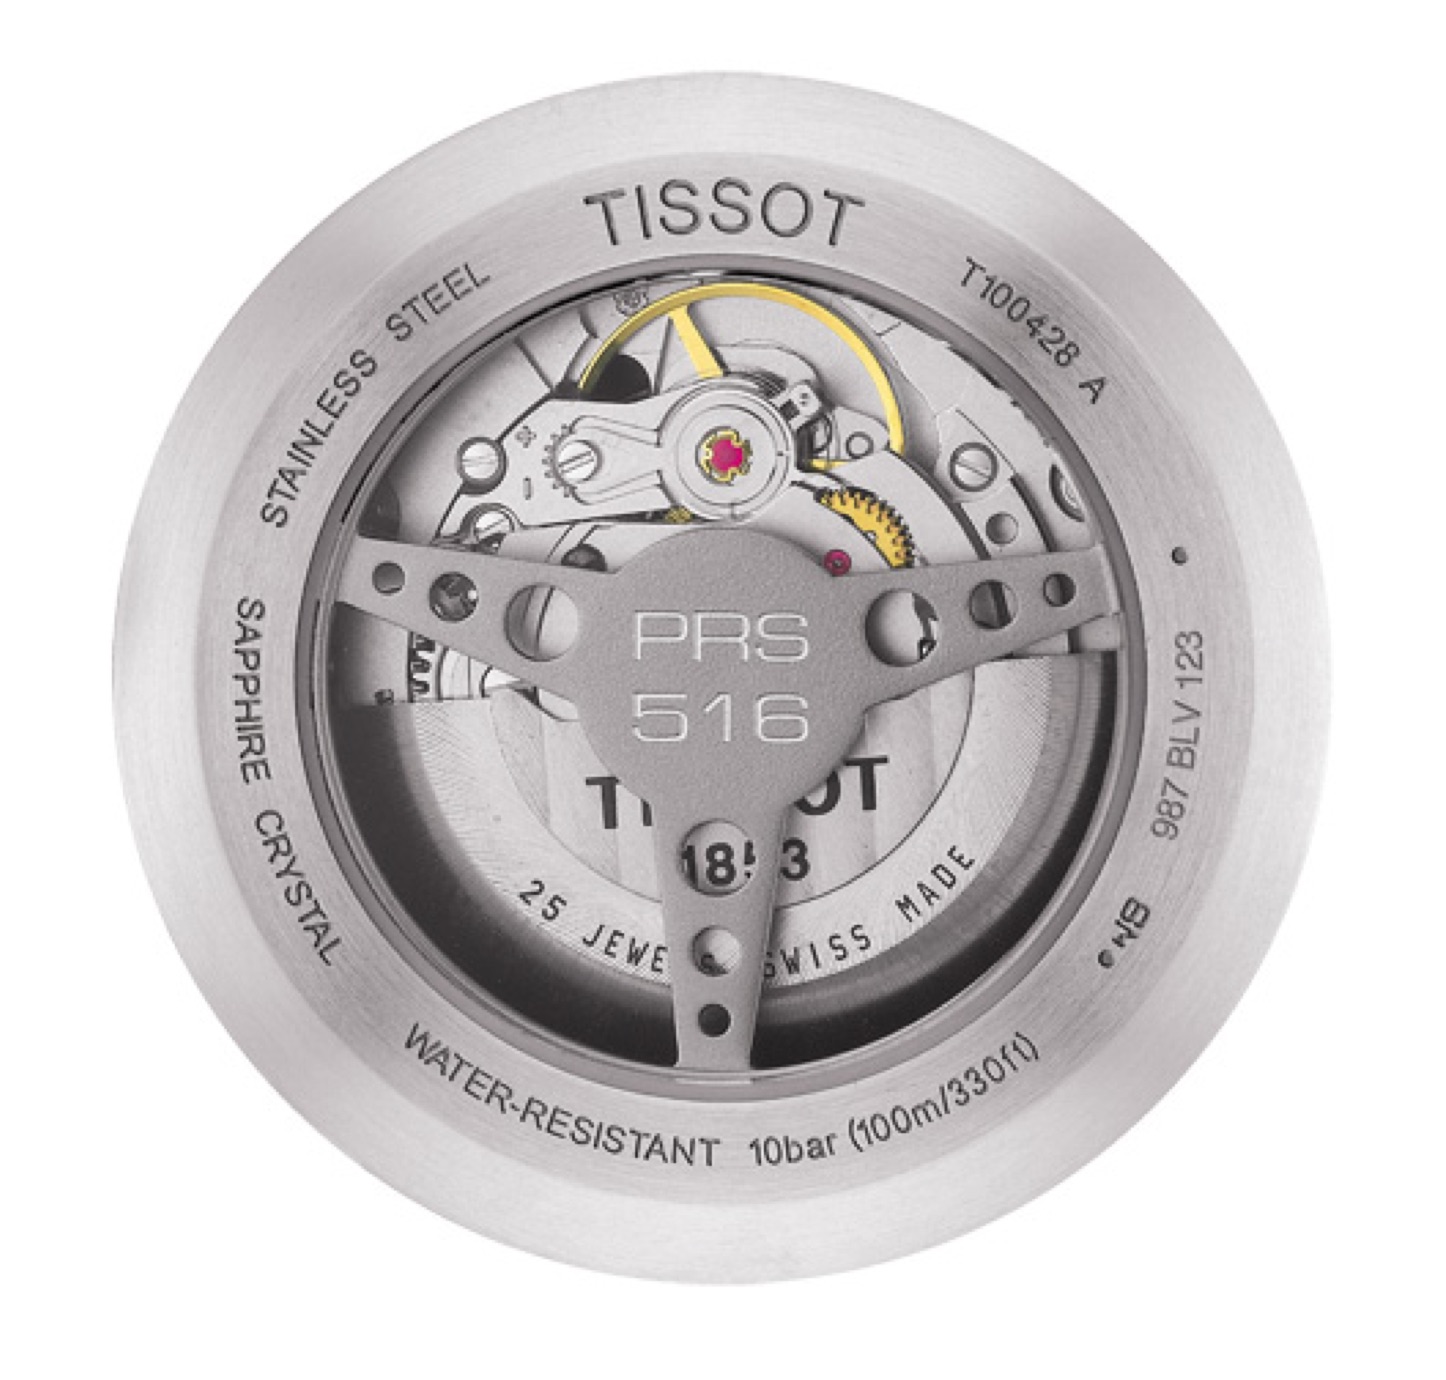 Tissot PRS 516 Automatic Small Second movement